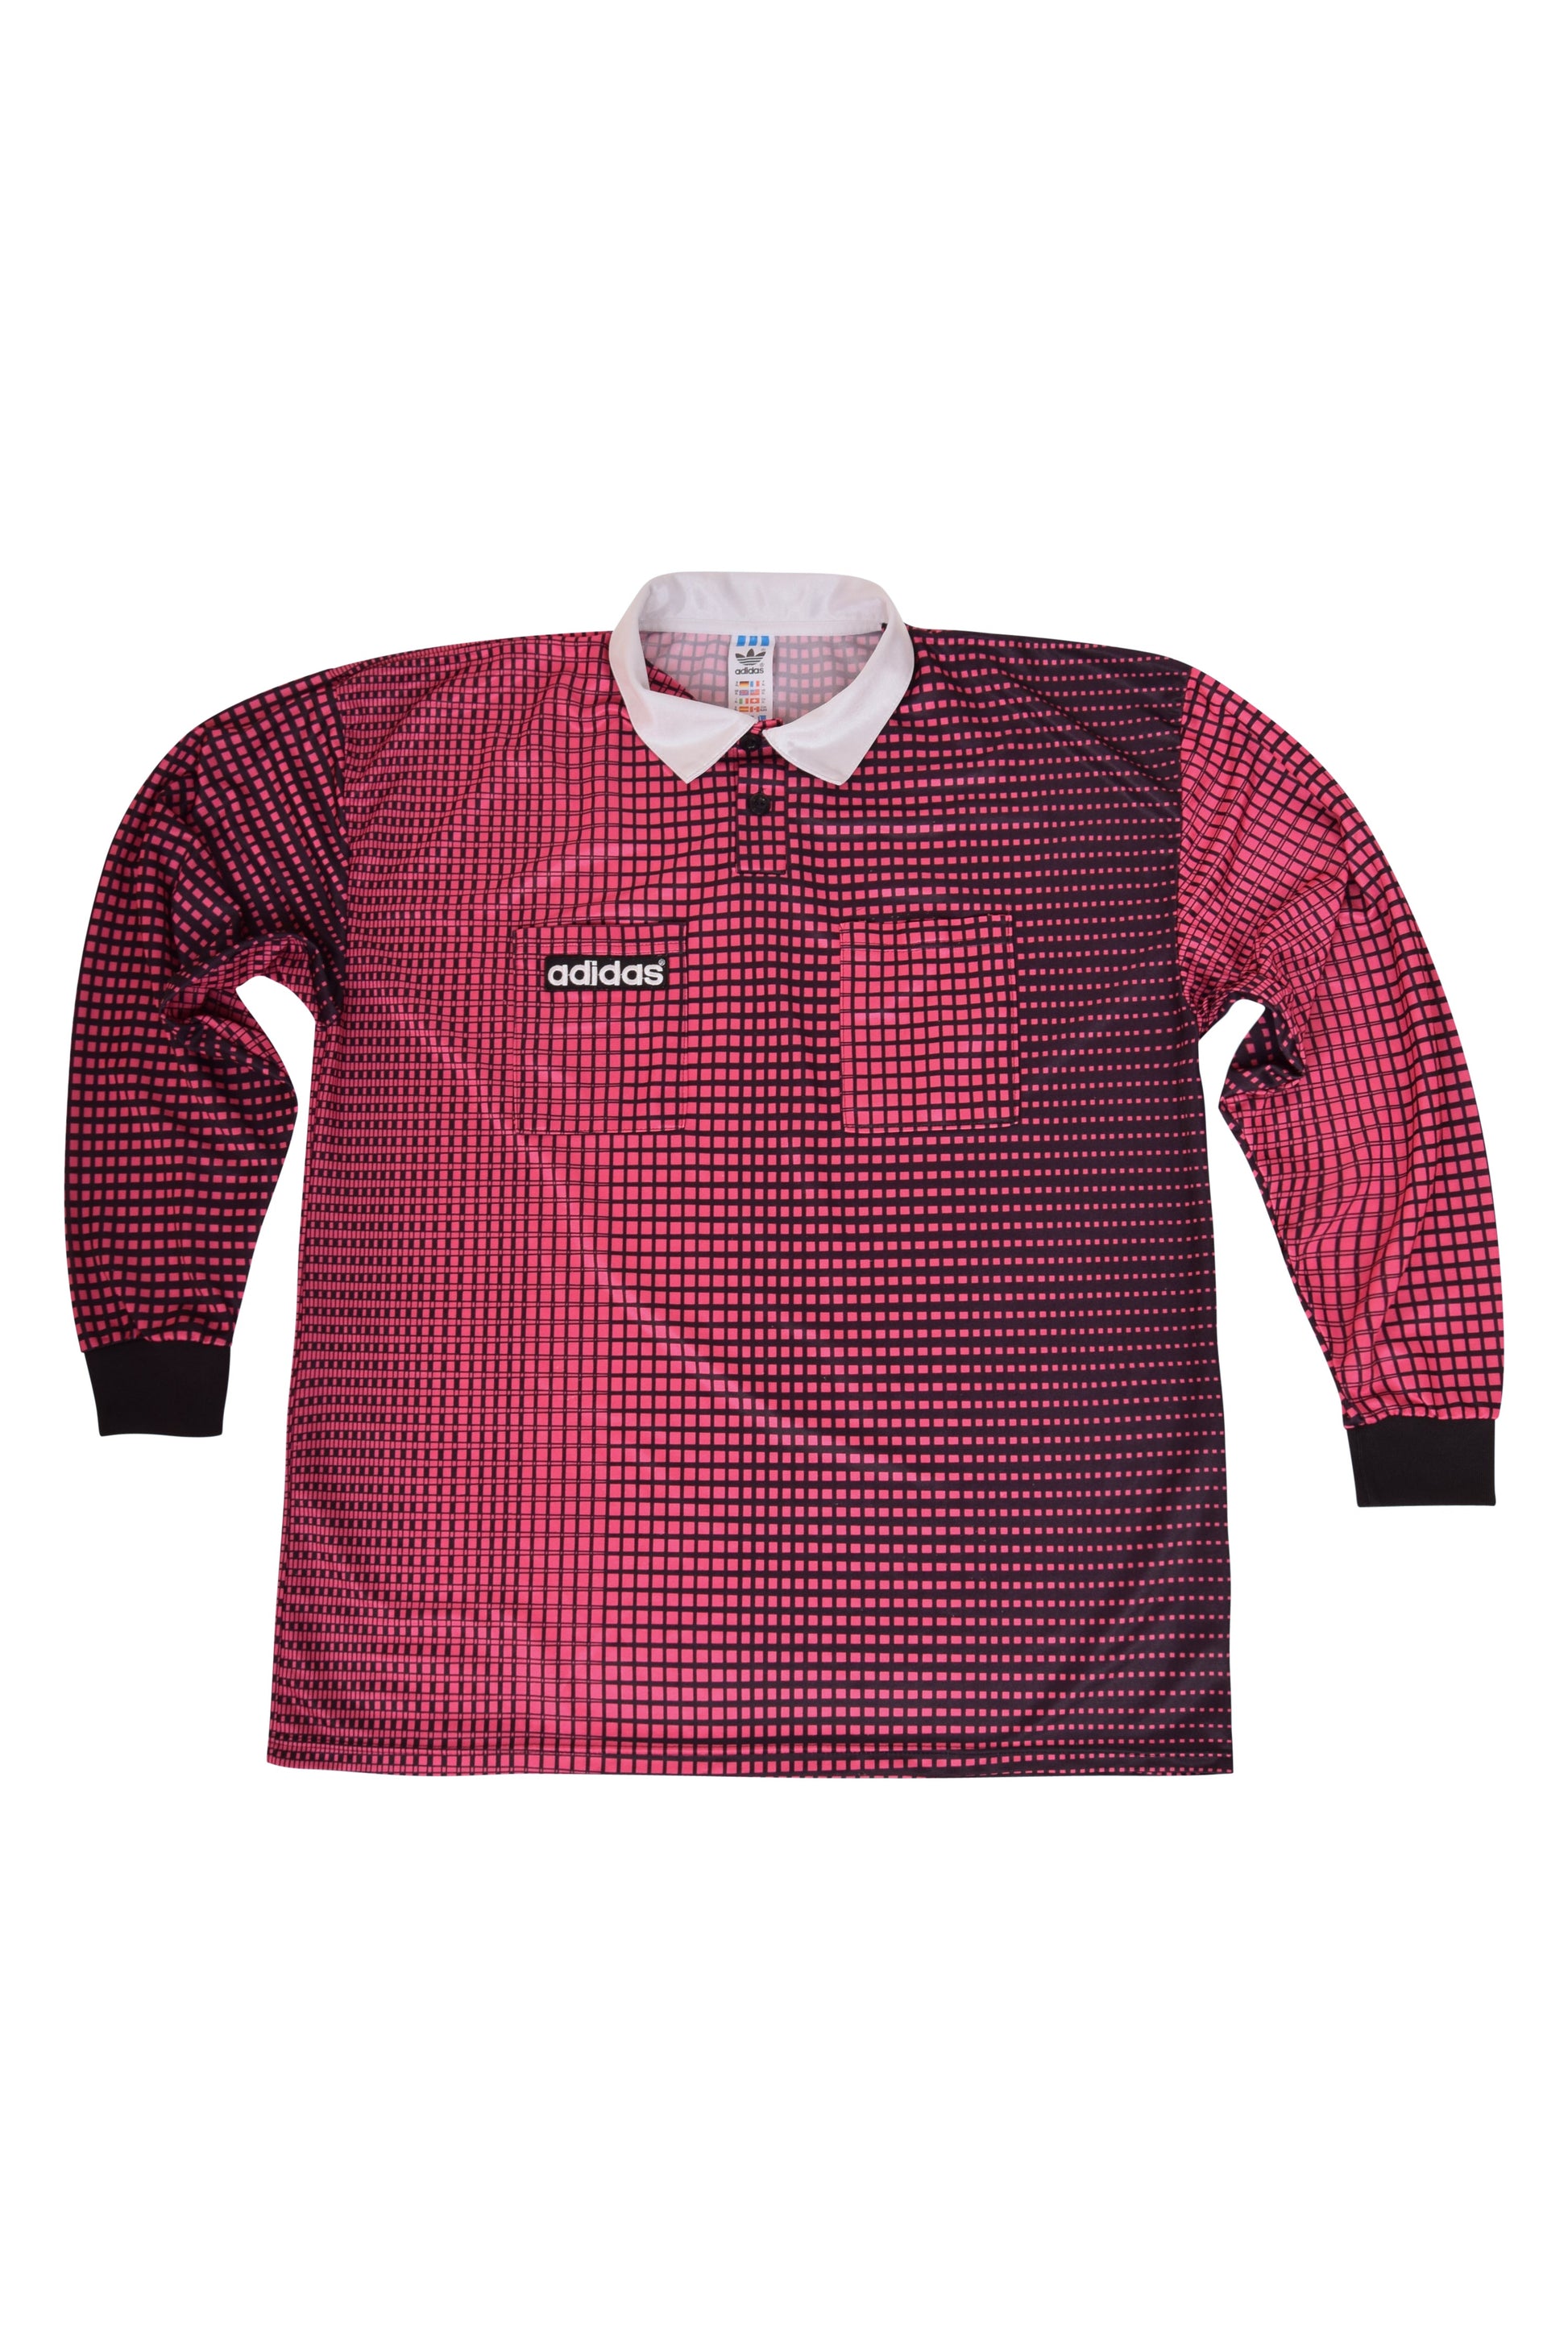 Vintage Adidas Referee Shirt Euro 1996 Size XL Black Pink Made in England